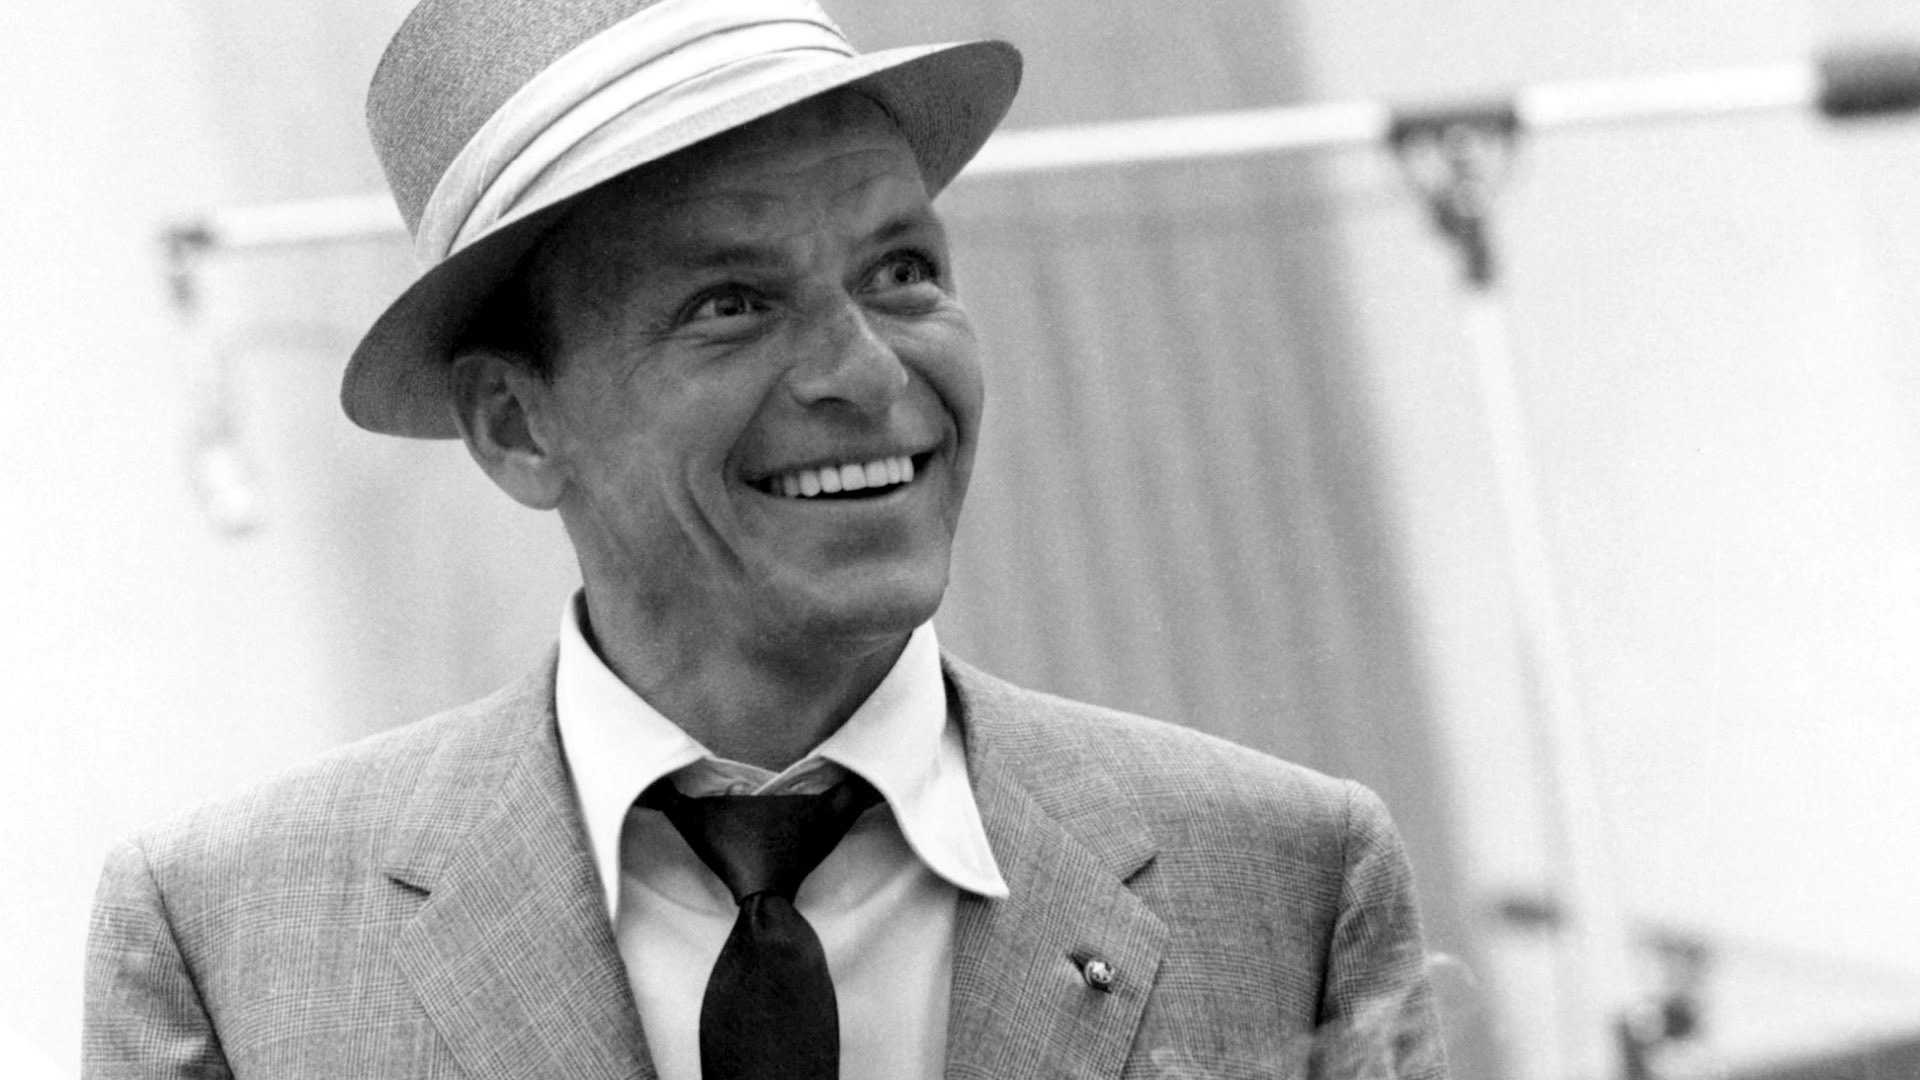 Frank Sinatra Smile Wallpaper 1920x1080 px